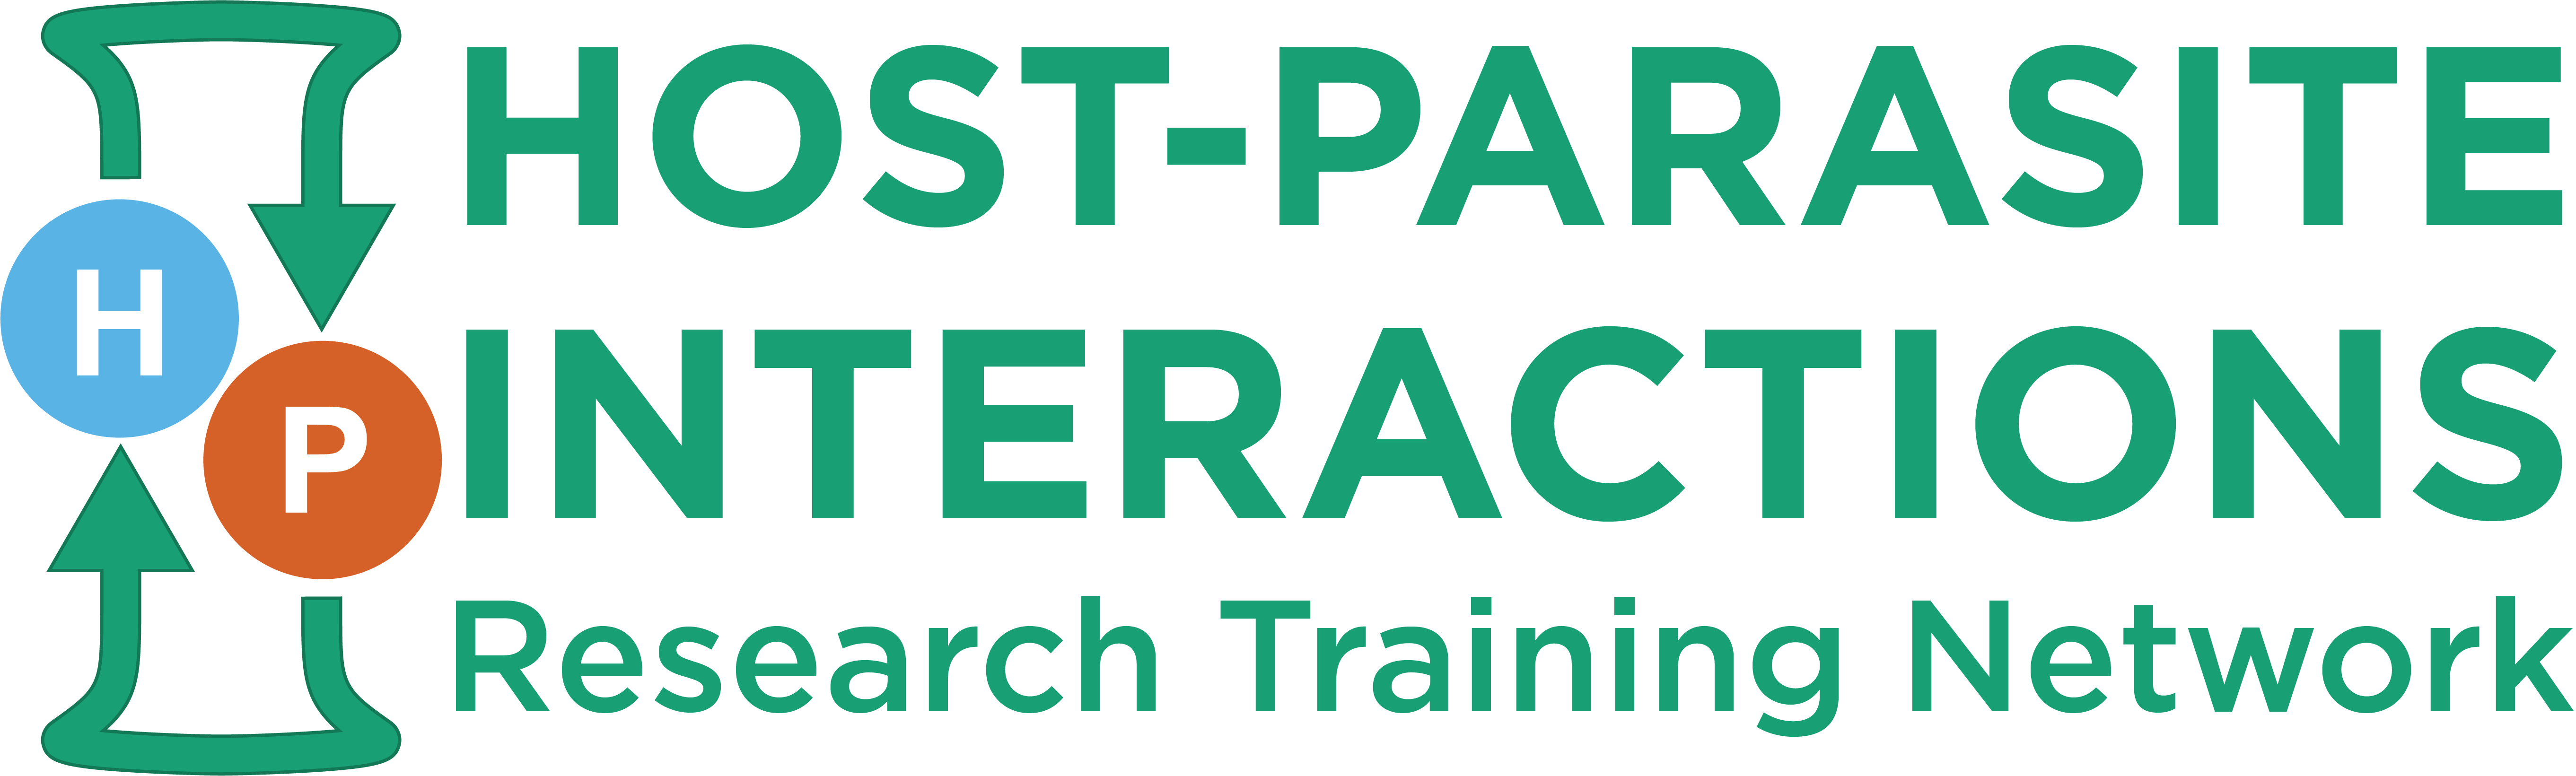 Host Parasite Interactions Network Logo